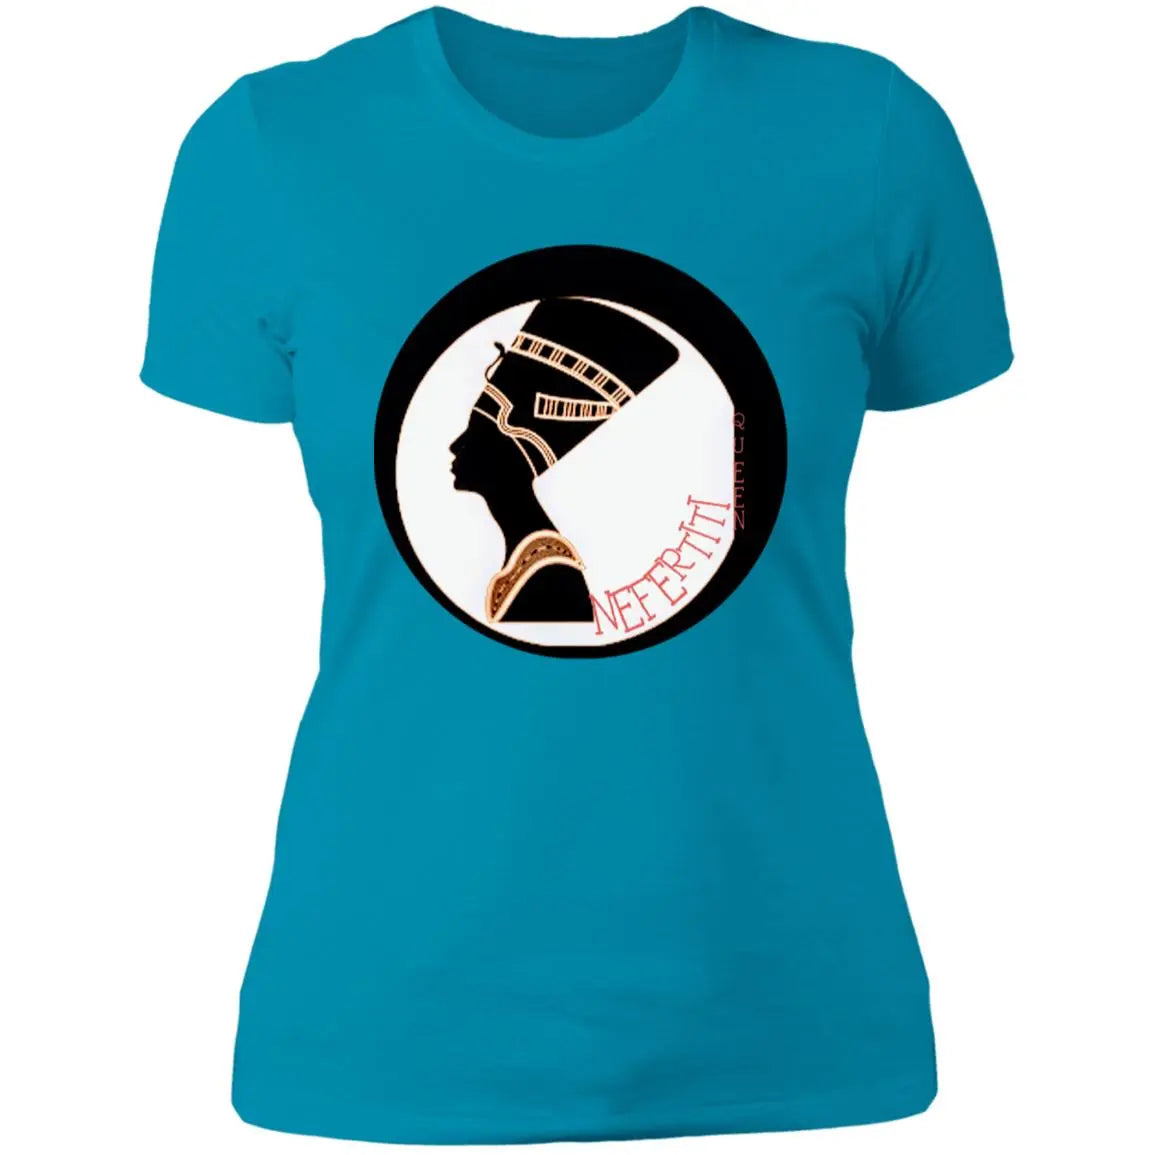 Multi - Queen Nefertiti - Ladies' Vintage Boyfriend T-Shirt – Multi Clothing Brand L L C®
multiclothingbrand.com/products/multi…

#clothingbrand #clothingline #clothingstore #clothingcompany #sustainable #affordable #premium #clothings #ethical #streetclothing #streetwear #multi